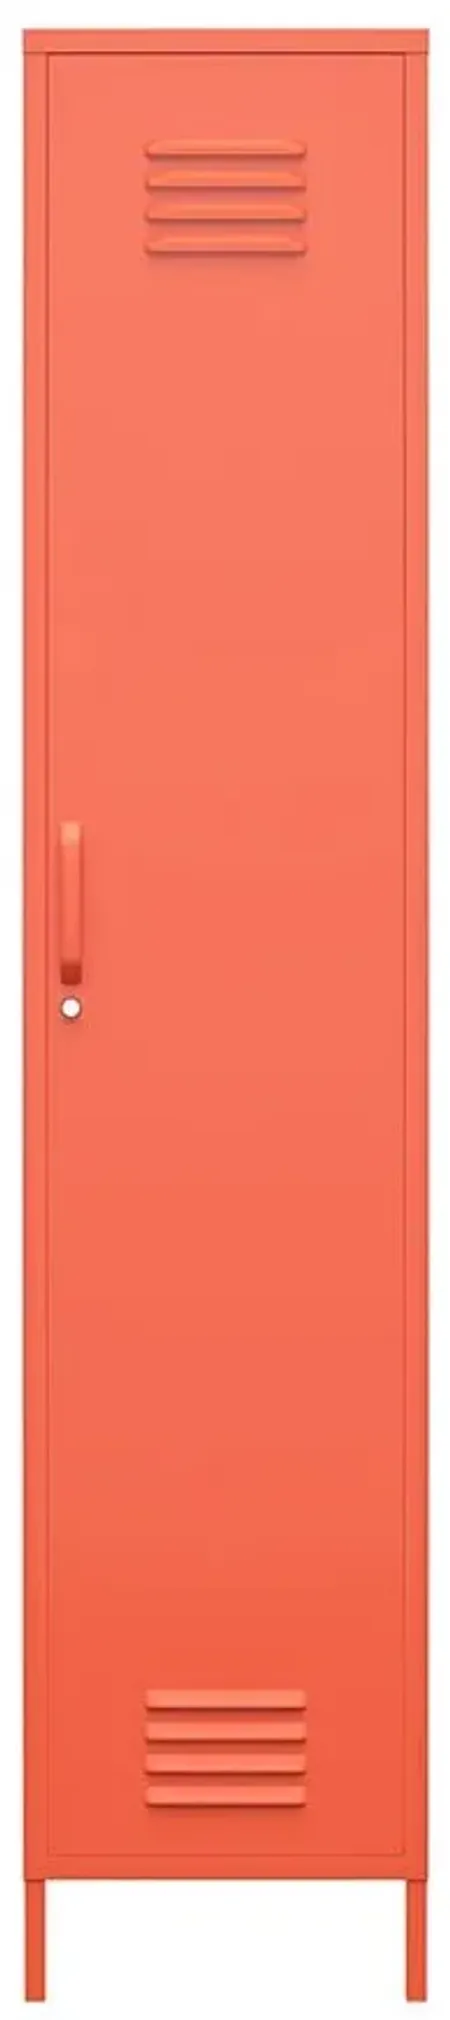 Novogratz Cache Single Metal Locker Storage Cabinet in Orange by DOREL HOME FURNISHINGS